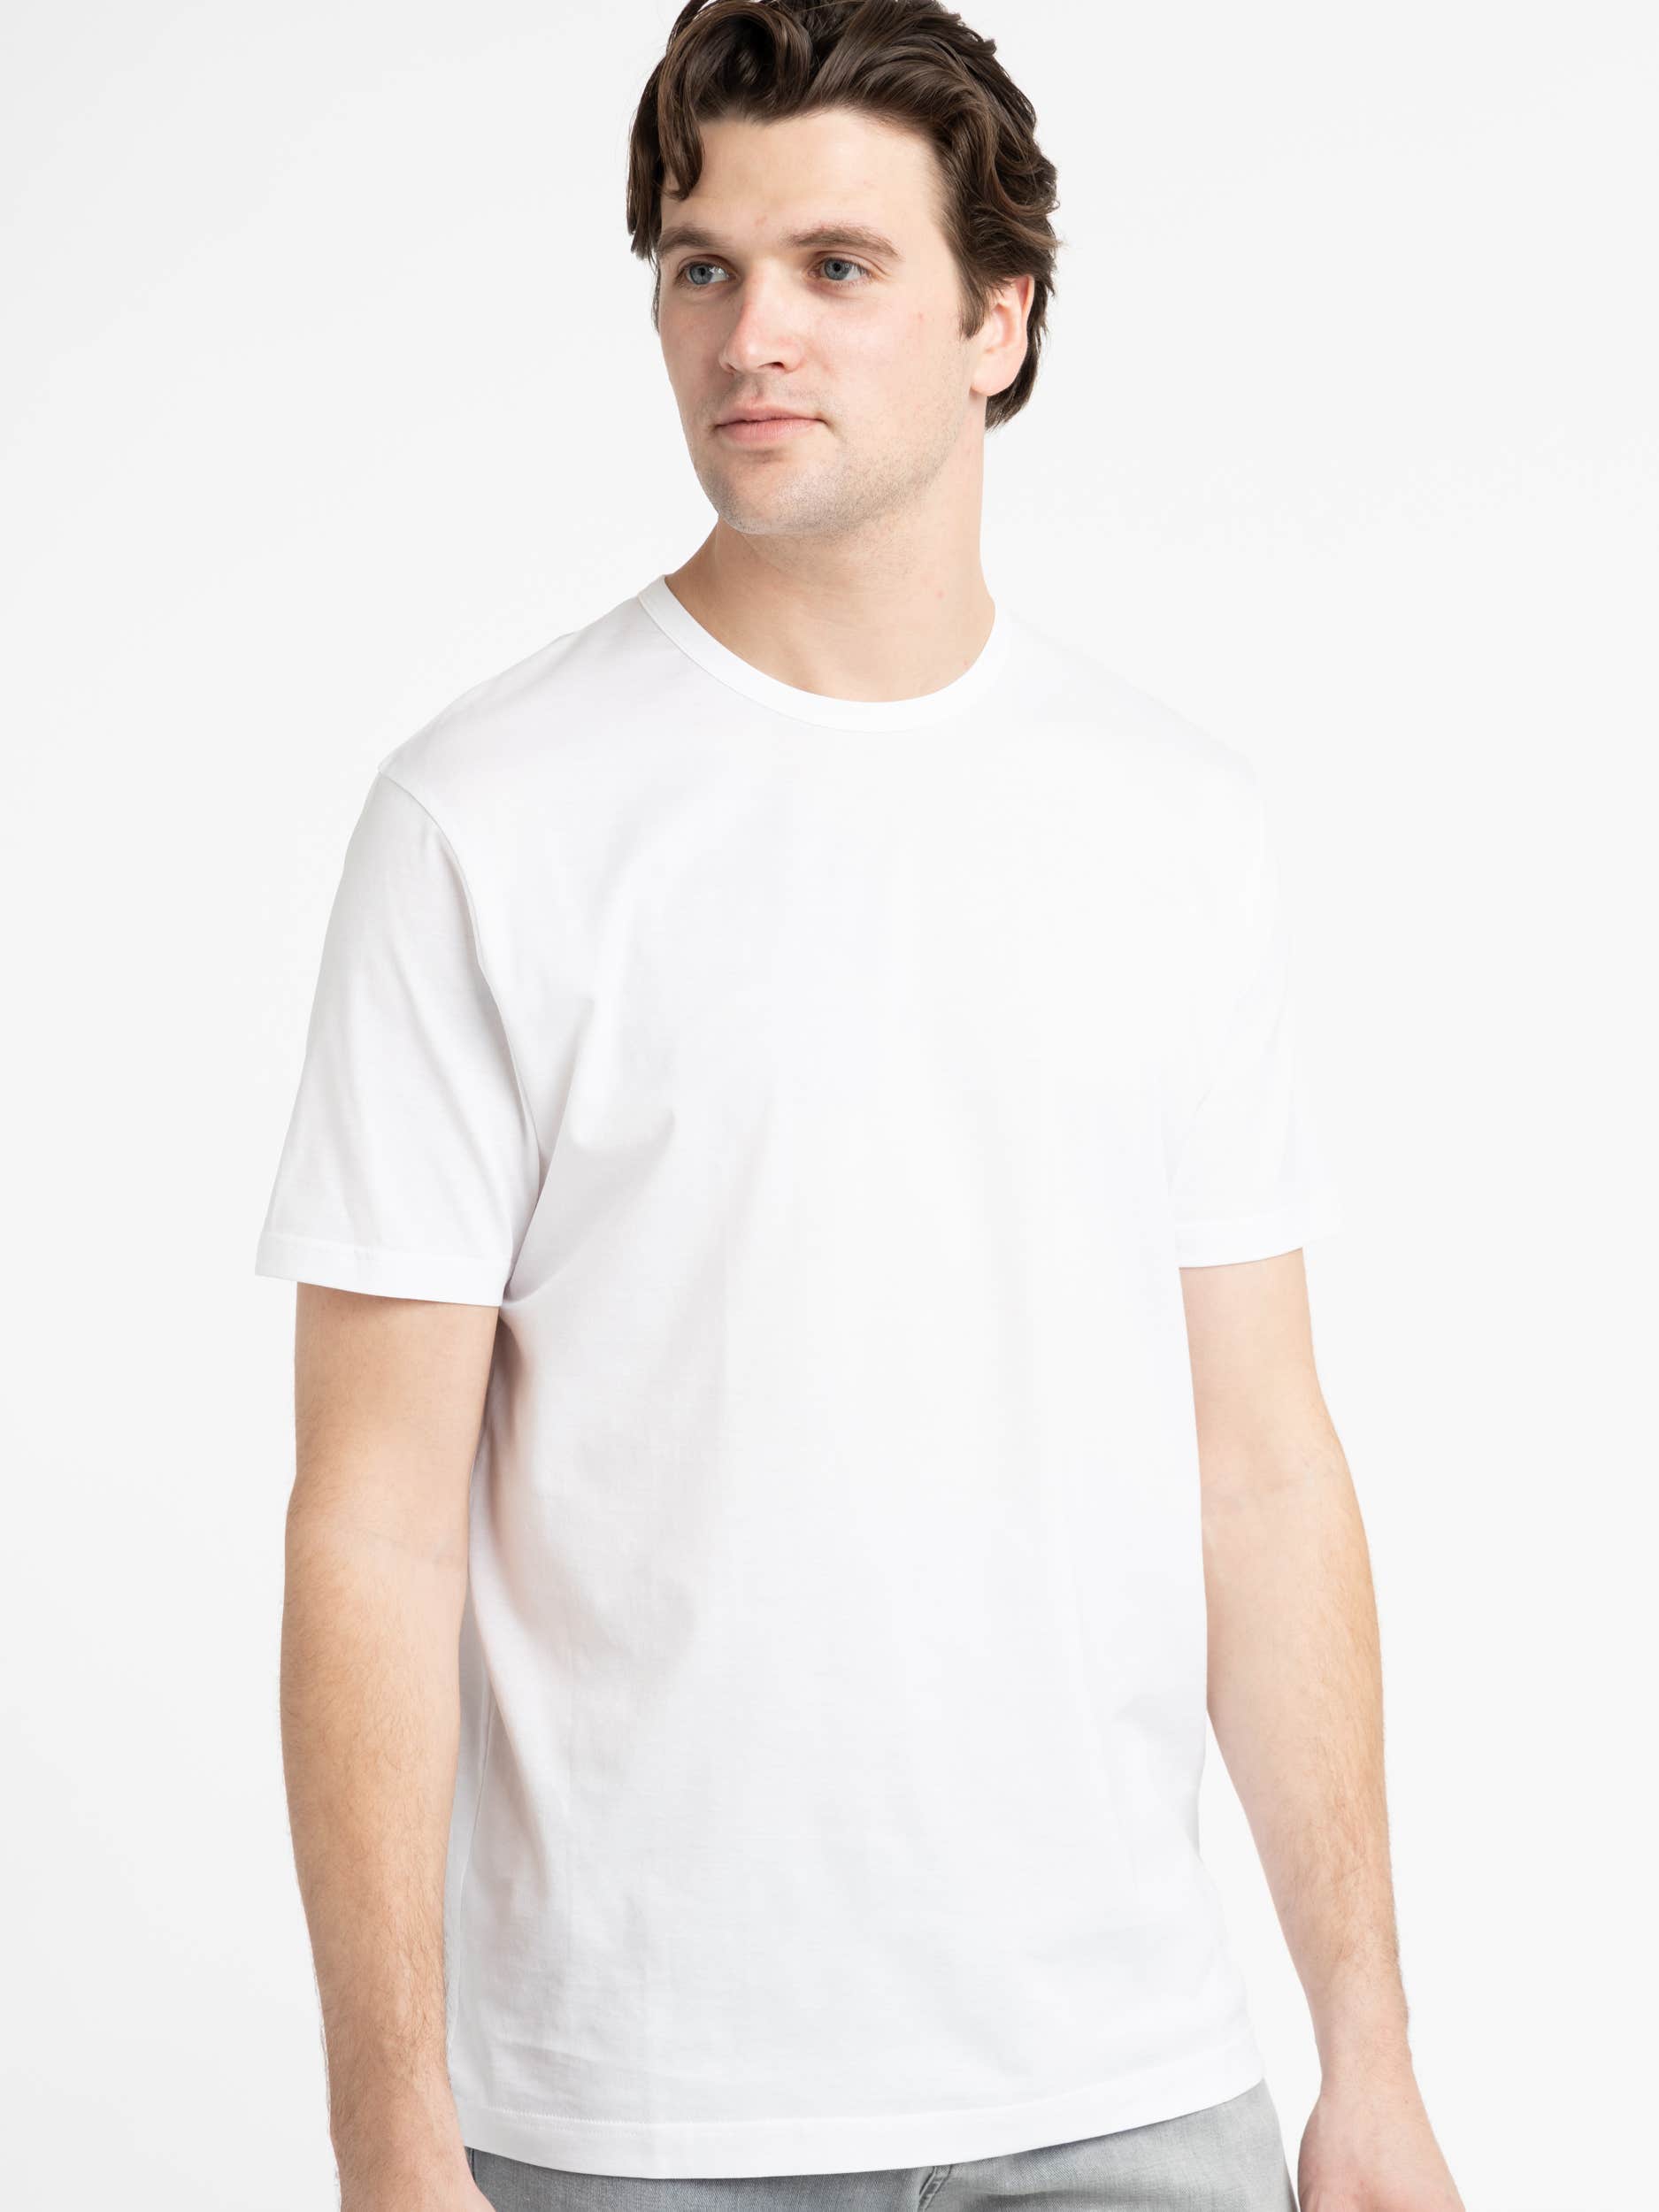 White Classic T-Shirt